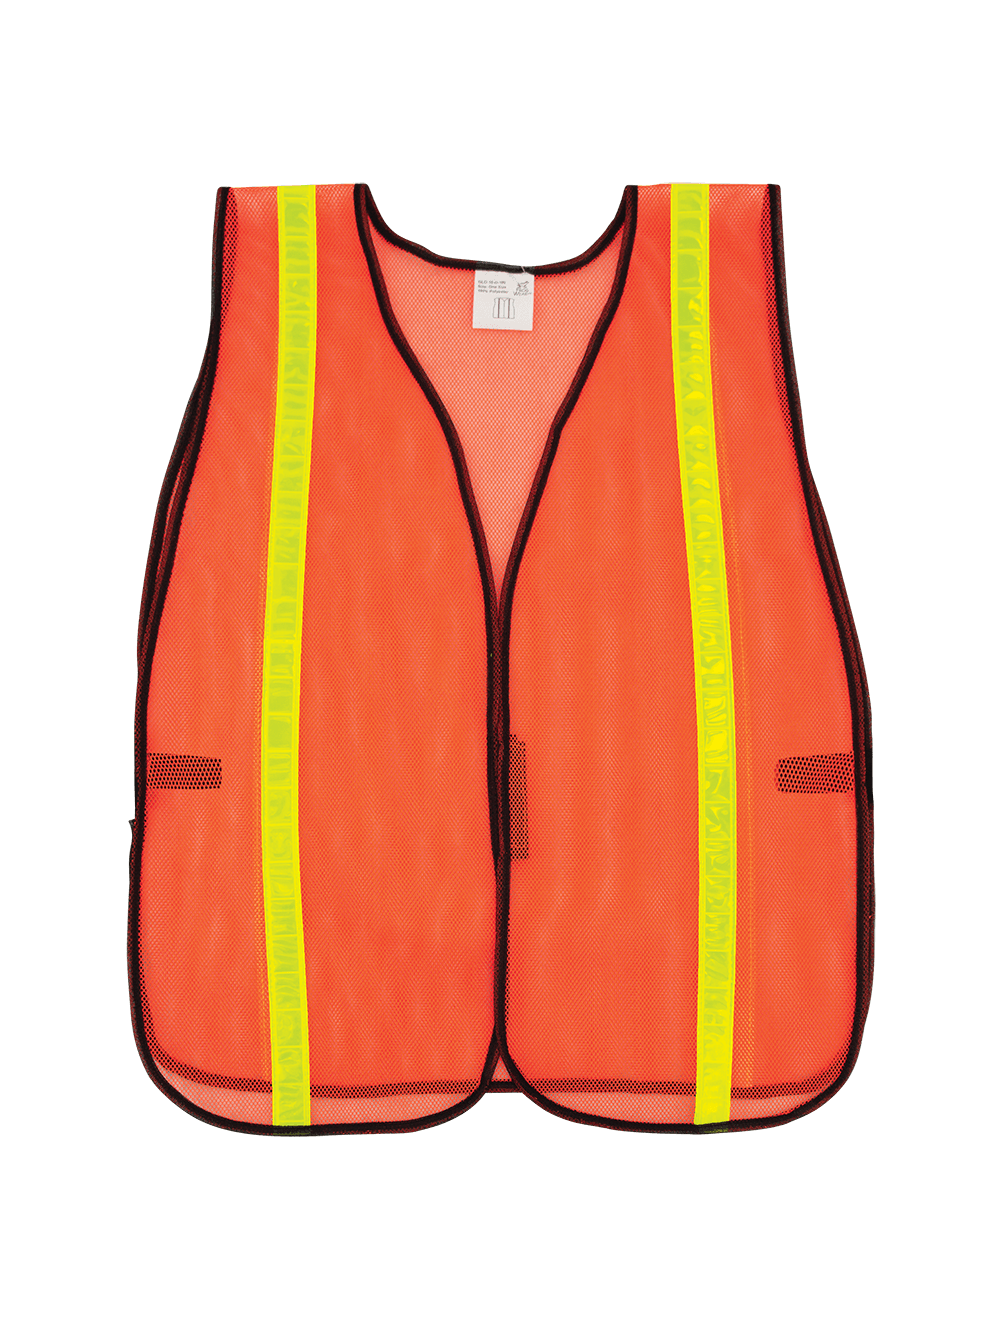 FrogWear® HV Enhanced Visibility Orange Economy Mesh Safety Vest with Reflective - GLO-10-O-1IN